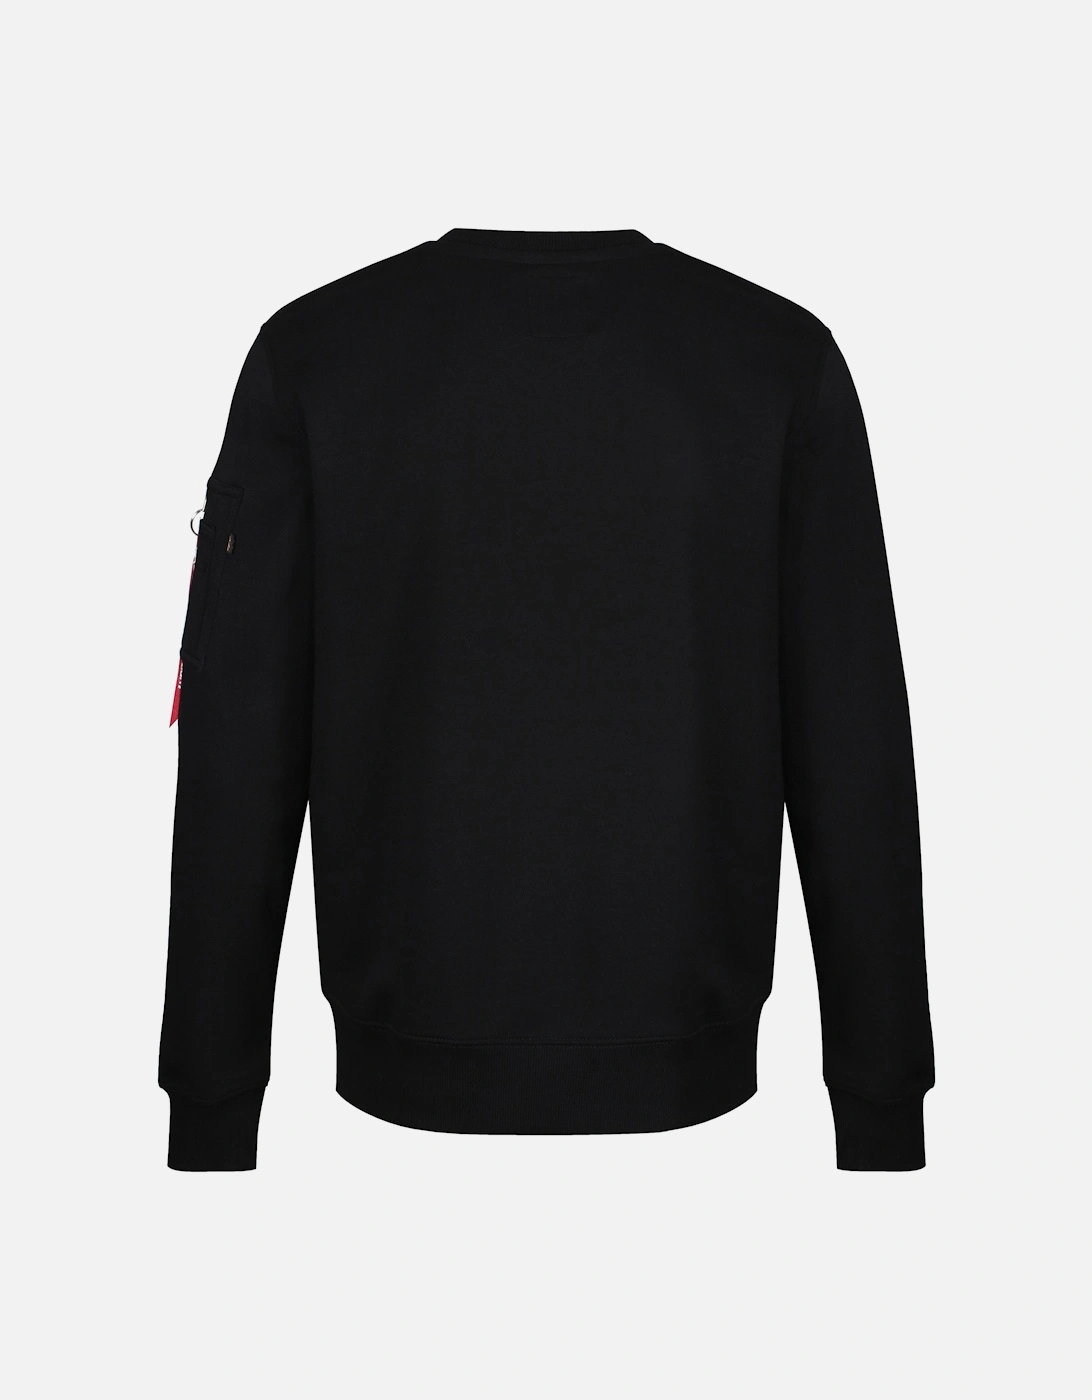 Limited Edition NASA Reflective Logo Sweatshirt | Black